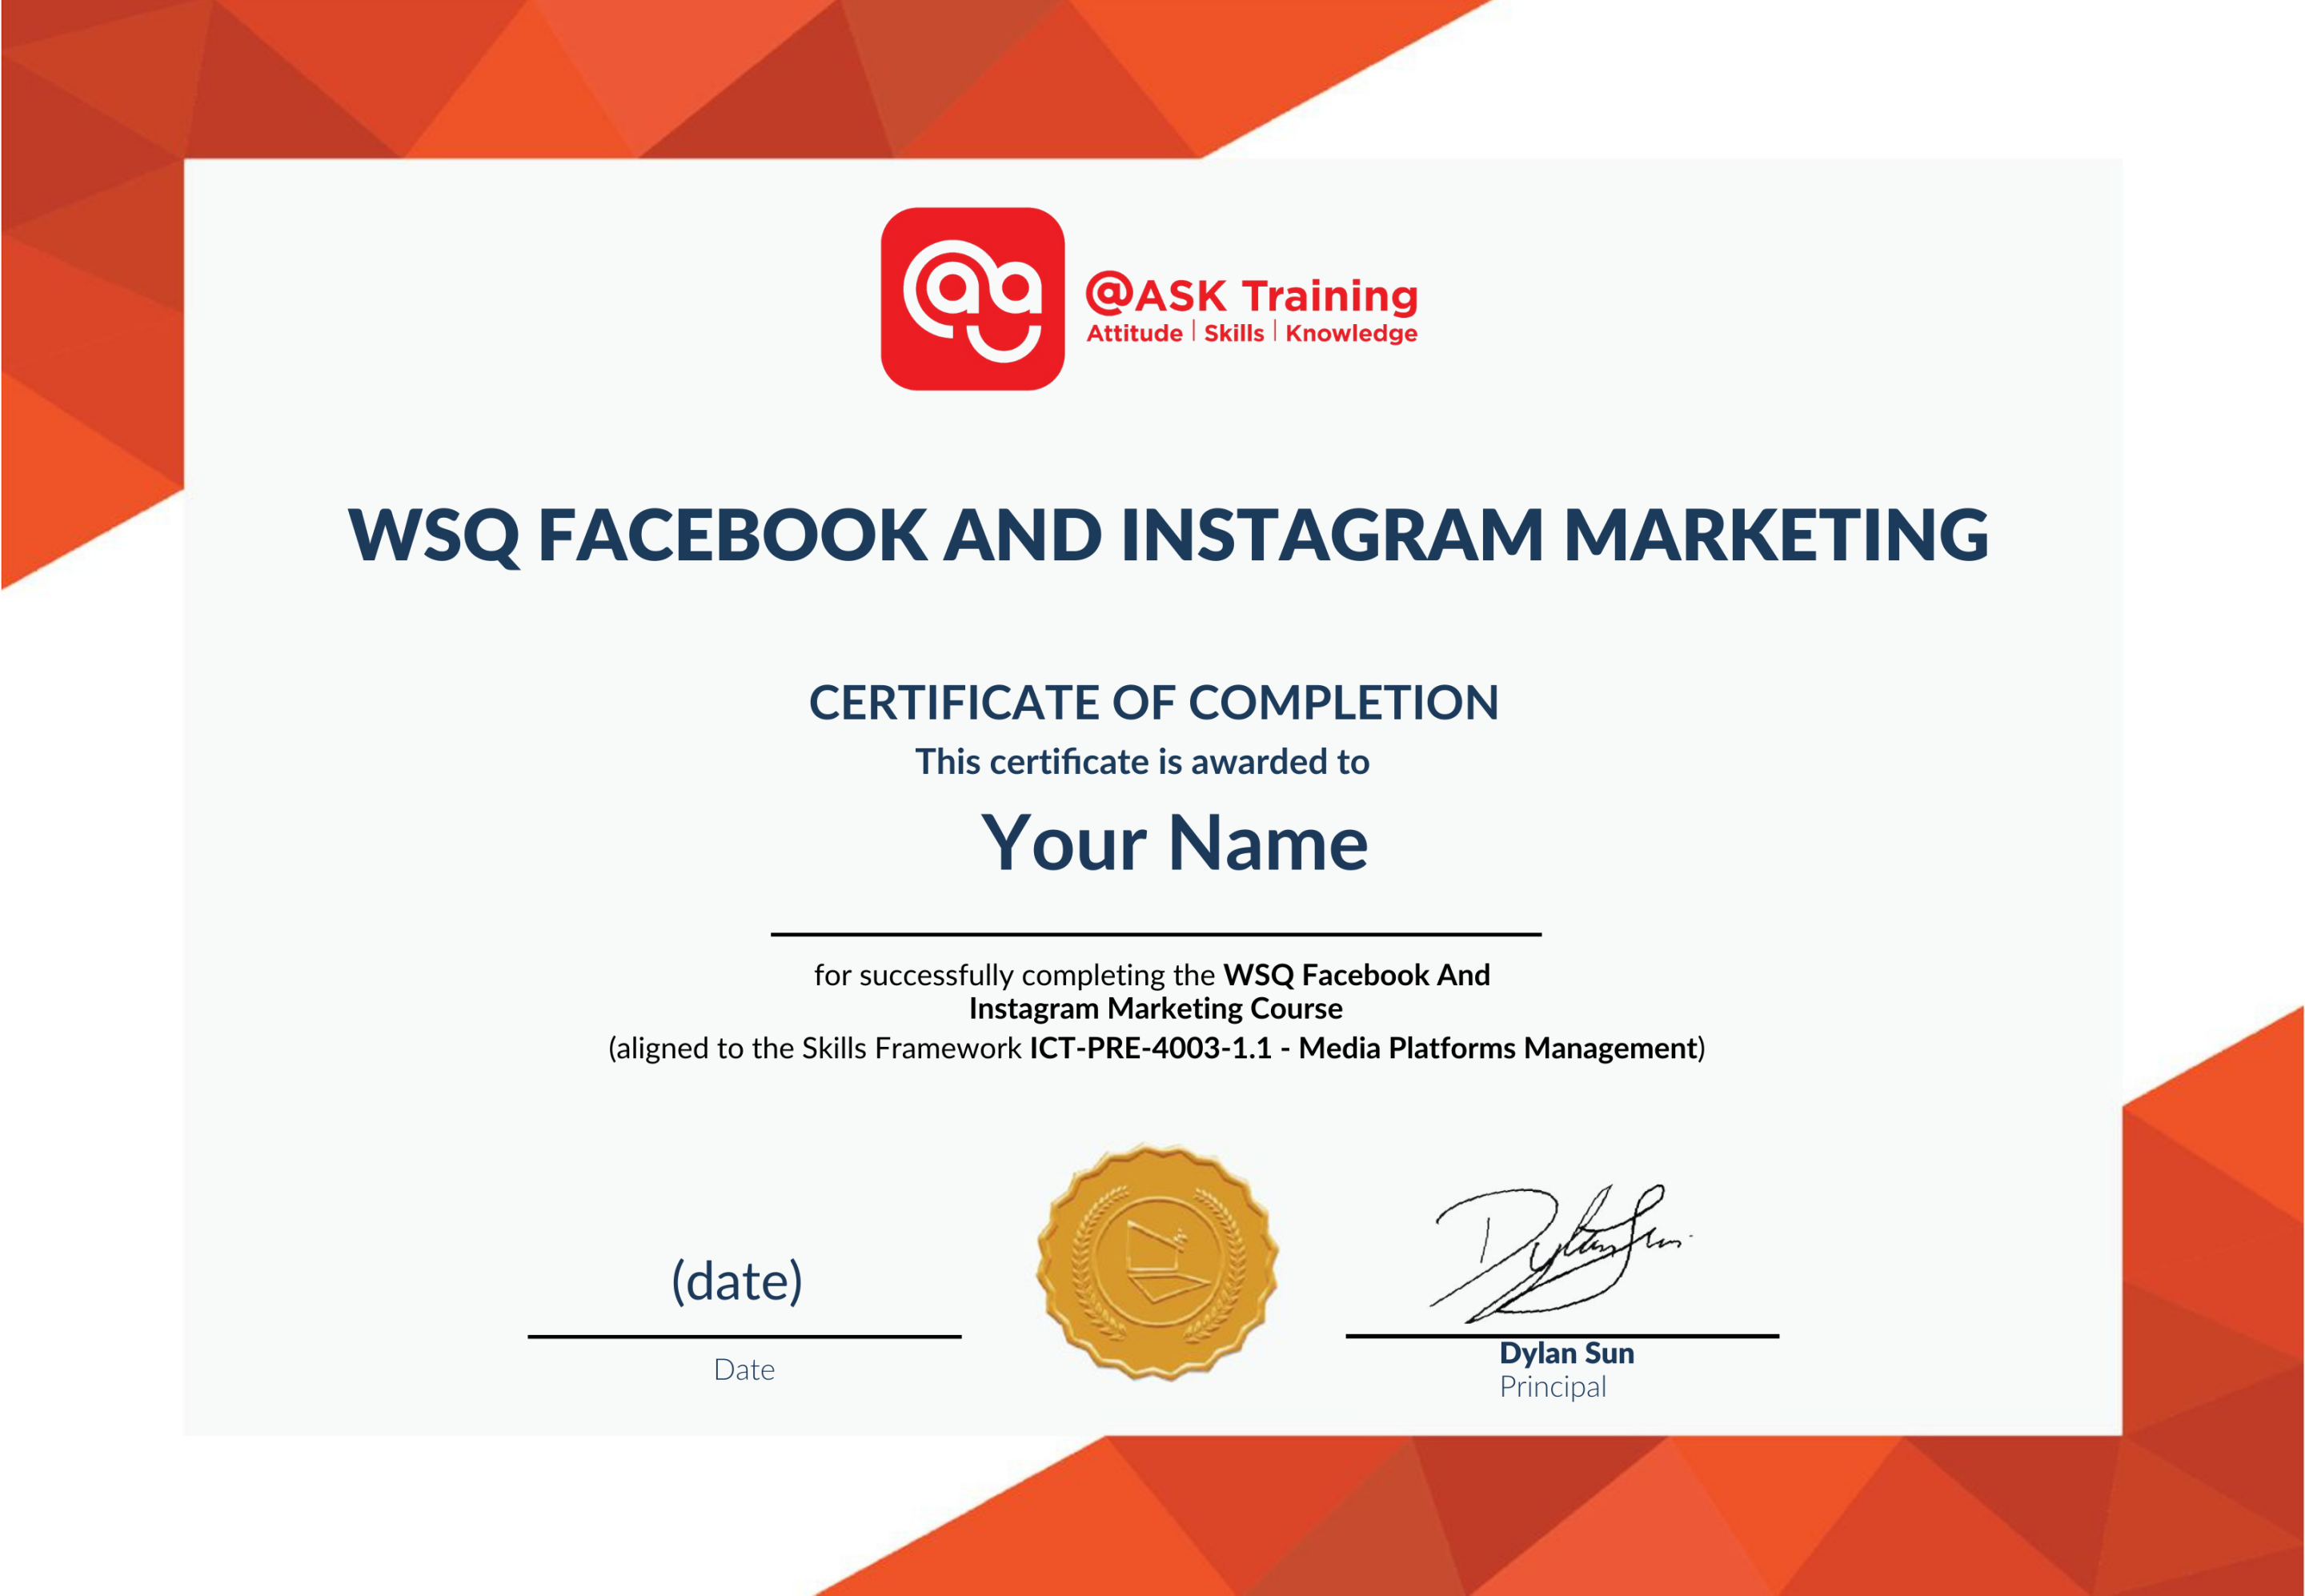 WSQ Facebook and Instagram Marketing Certificate Sample